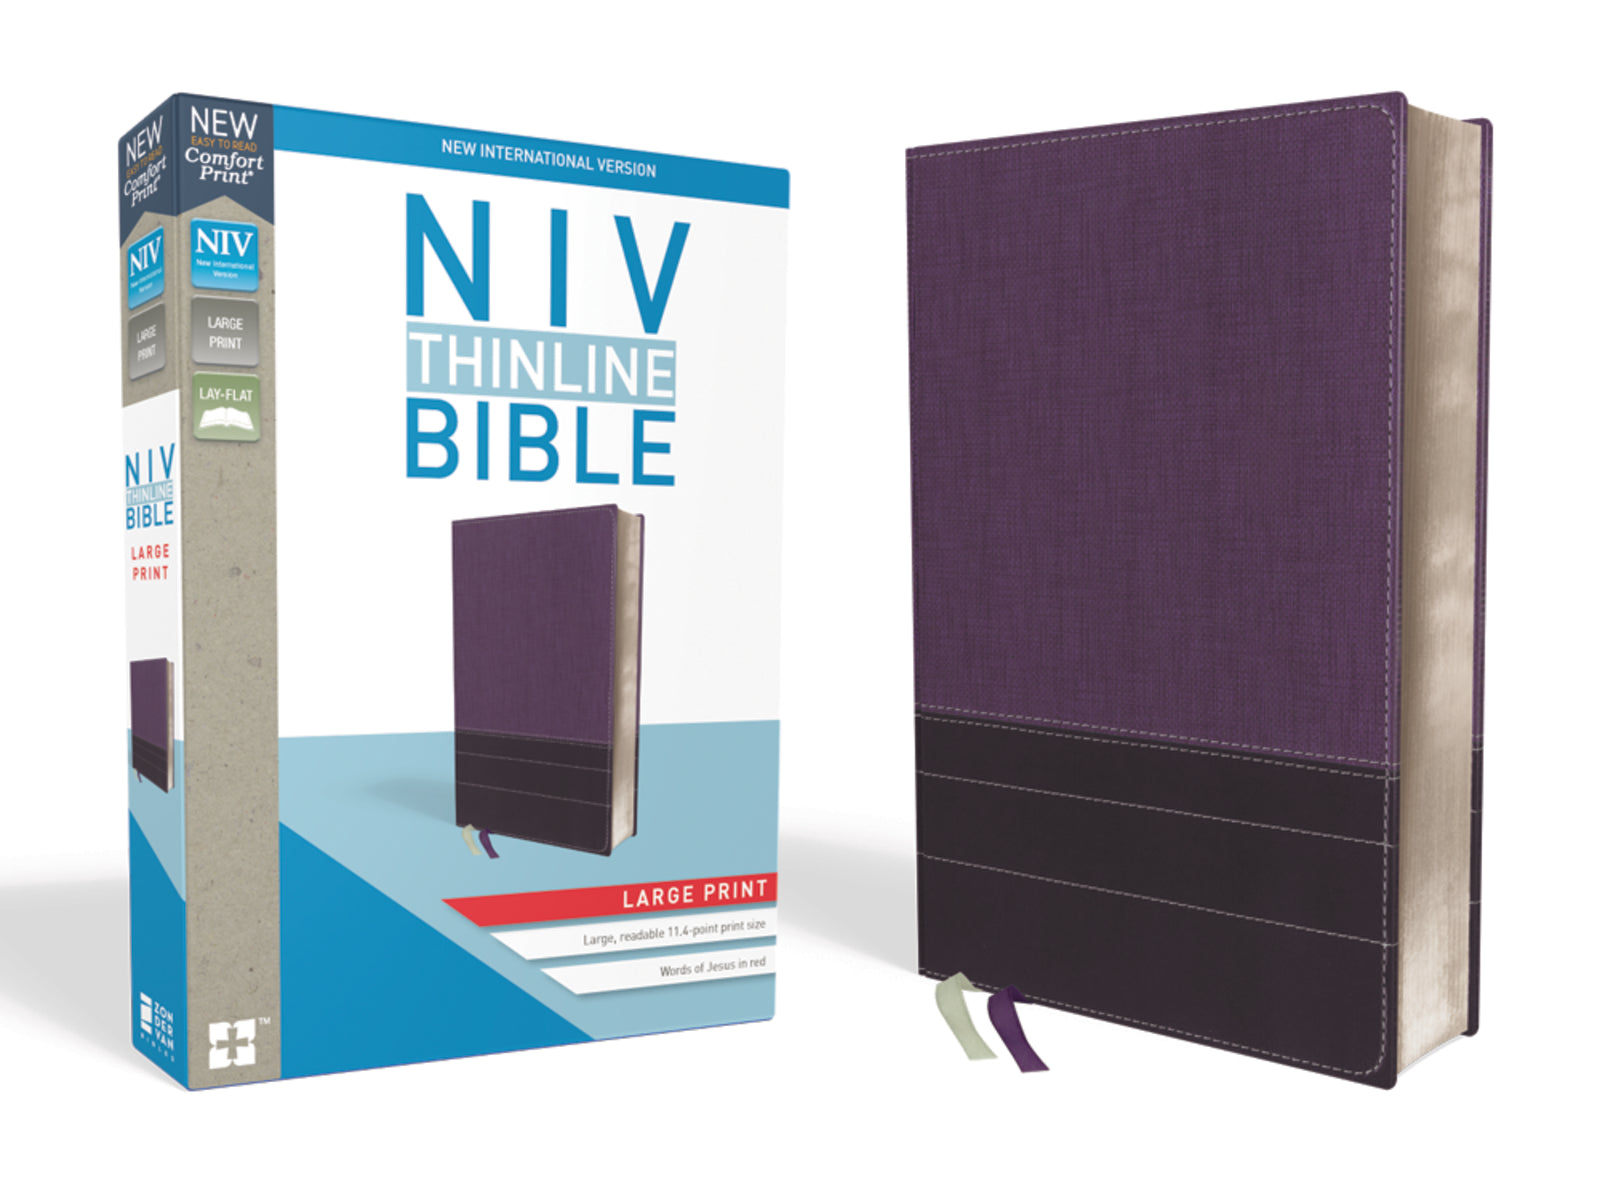 NIV Thinline Bible Large Print Comfort-Purple